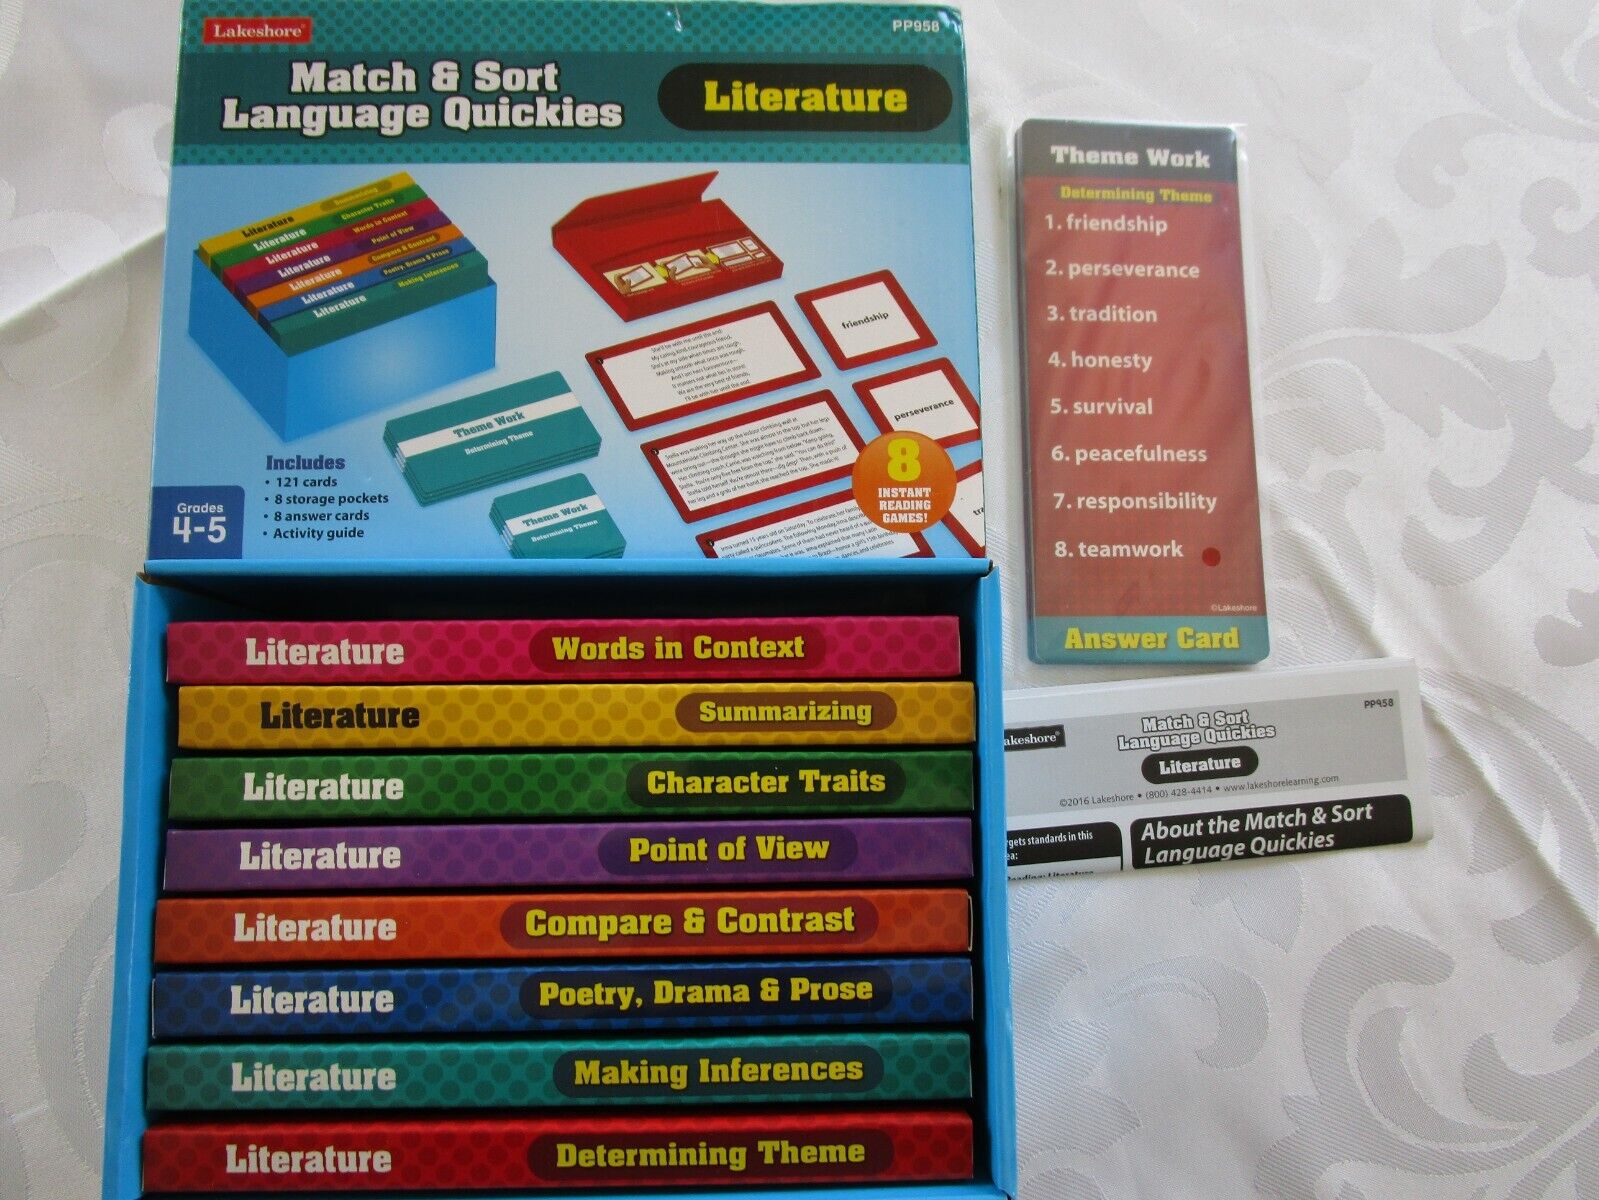 Lakeshore Vocabulary 8 Games Match & Sort Language Quickies Grades 4-5 - PP958